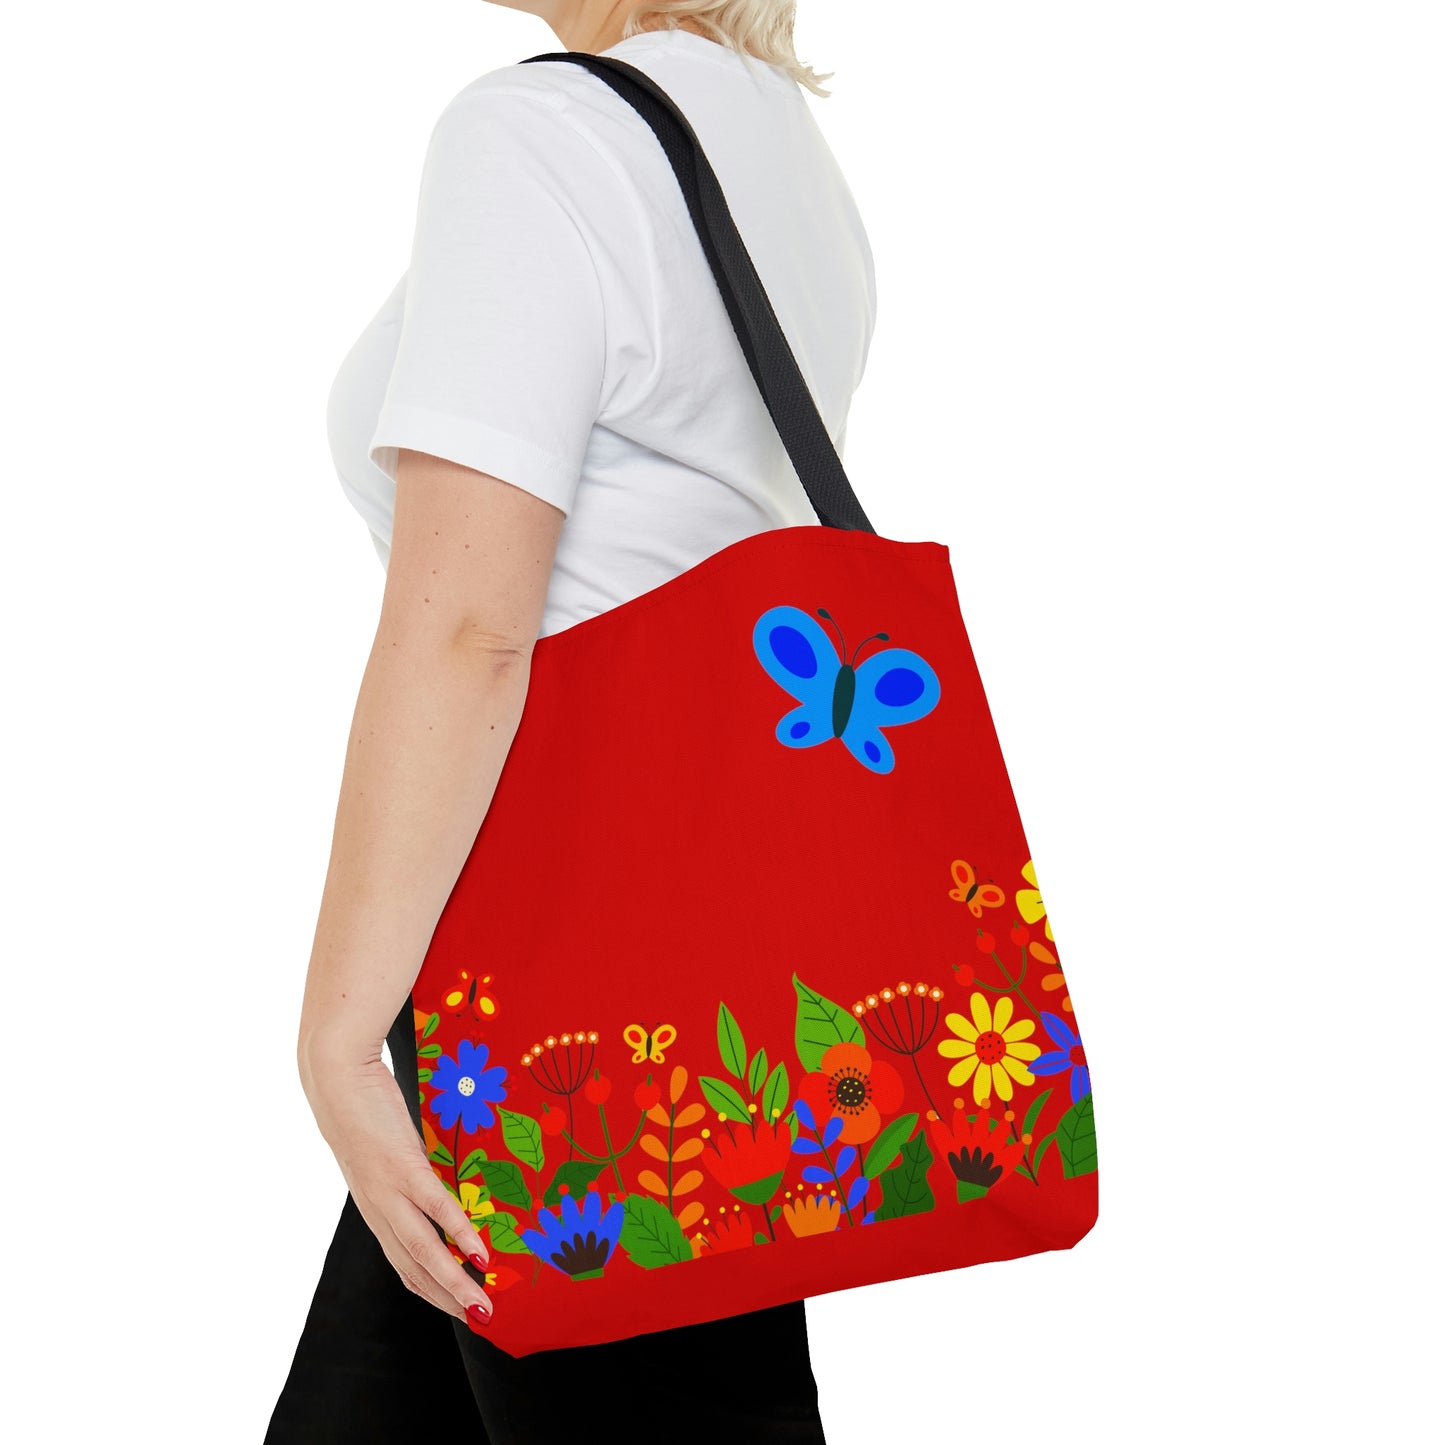 Duck in Bright Summer flowers - Scarlet de0000 - Tote Bag